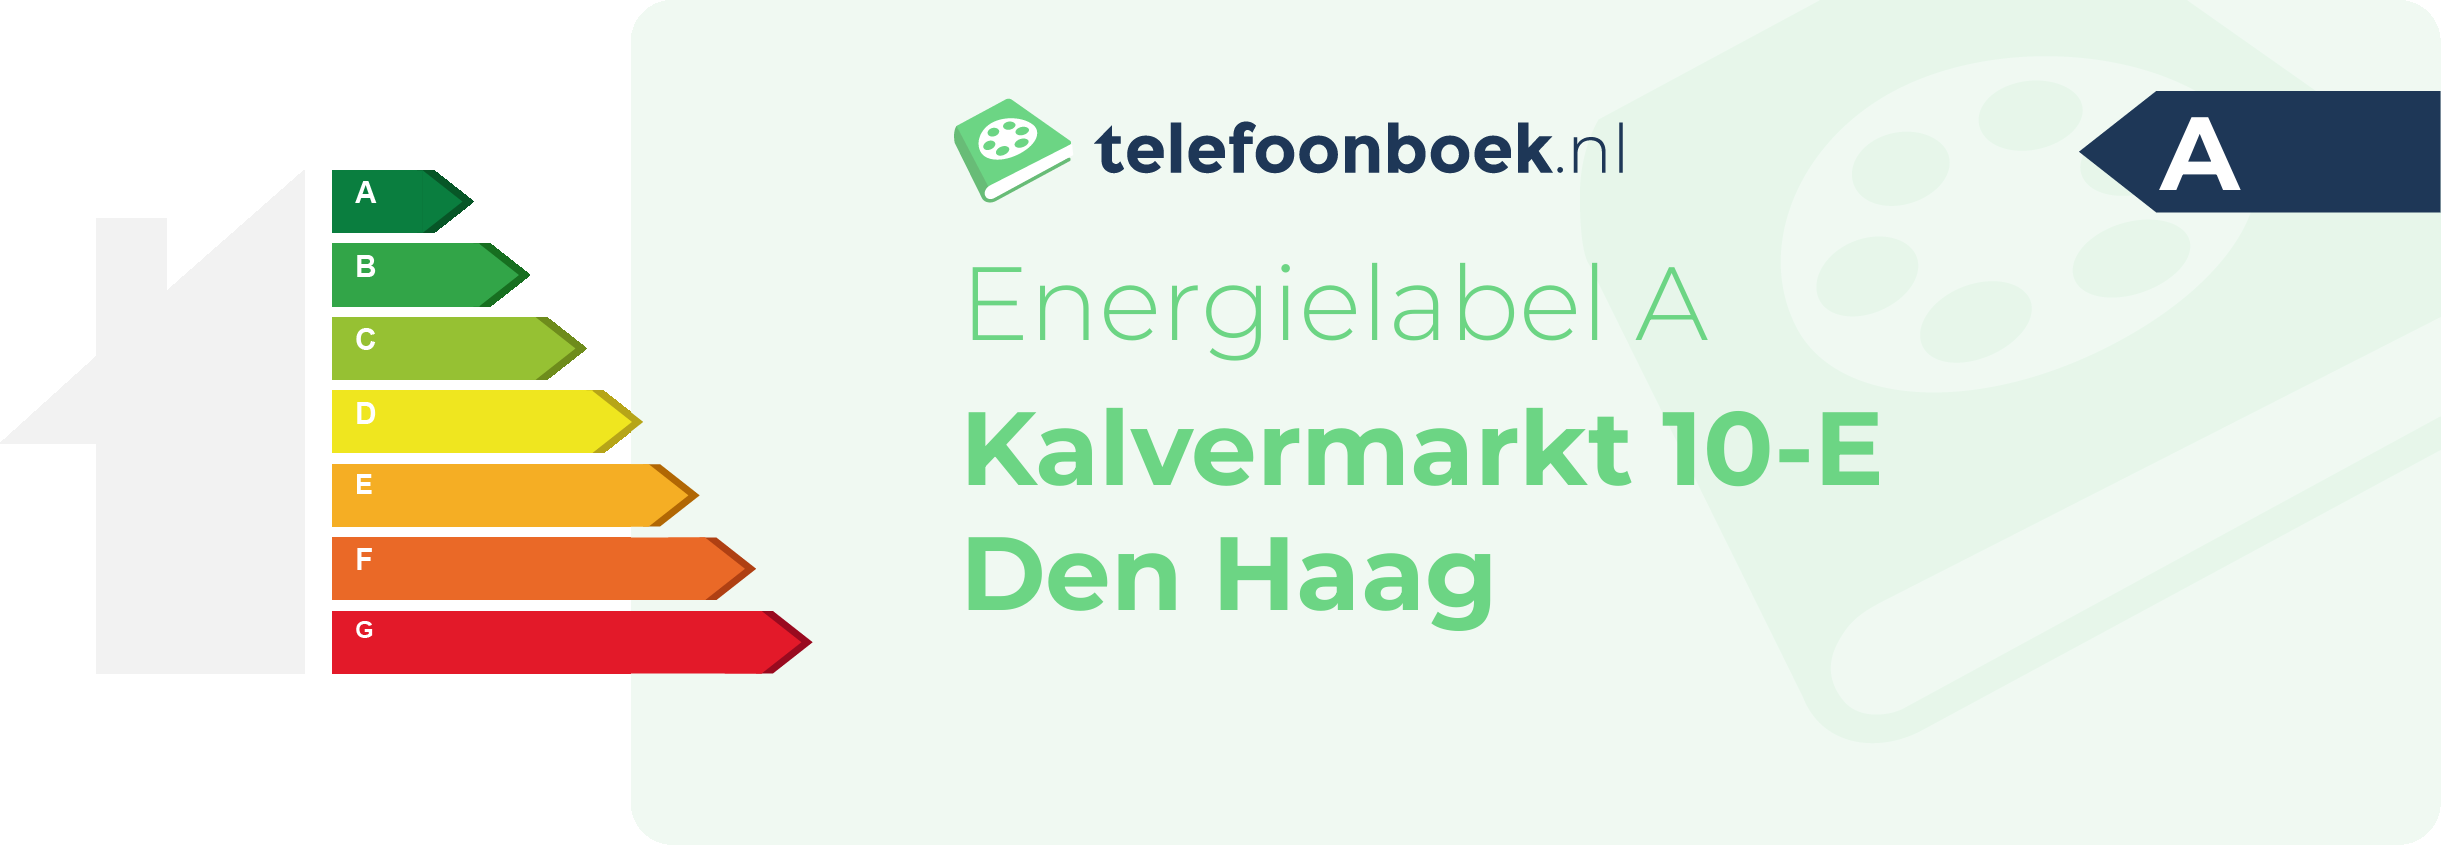 Energielabel Kalvermarkt 10-E Den Haag